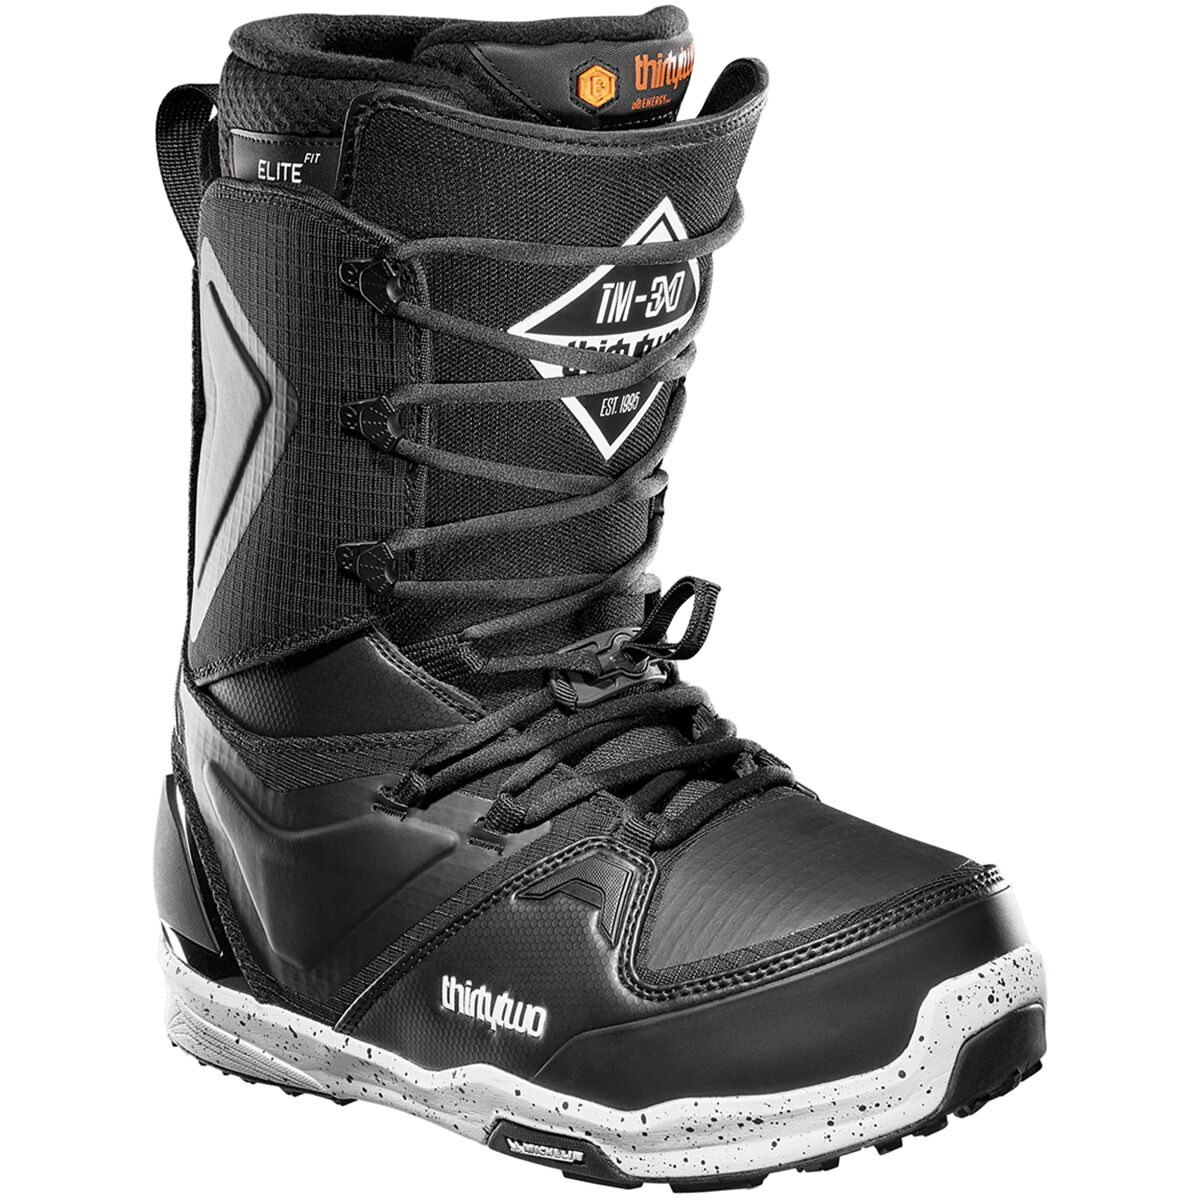 ThirtyTwo TM-3XD Snowboard Boot - 2022 - Men's